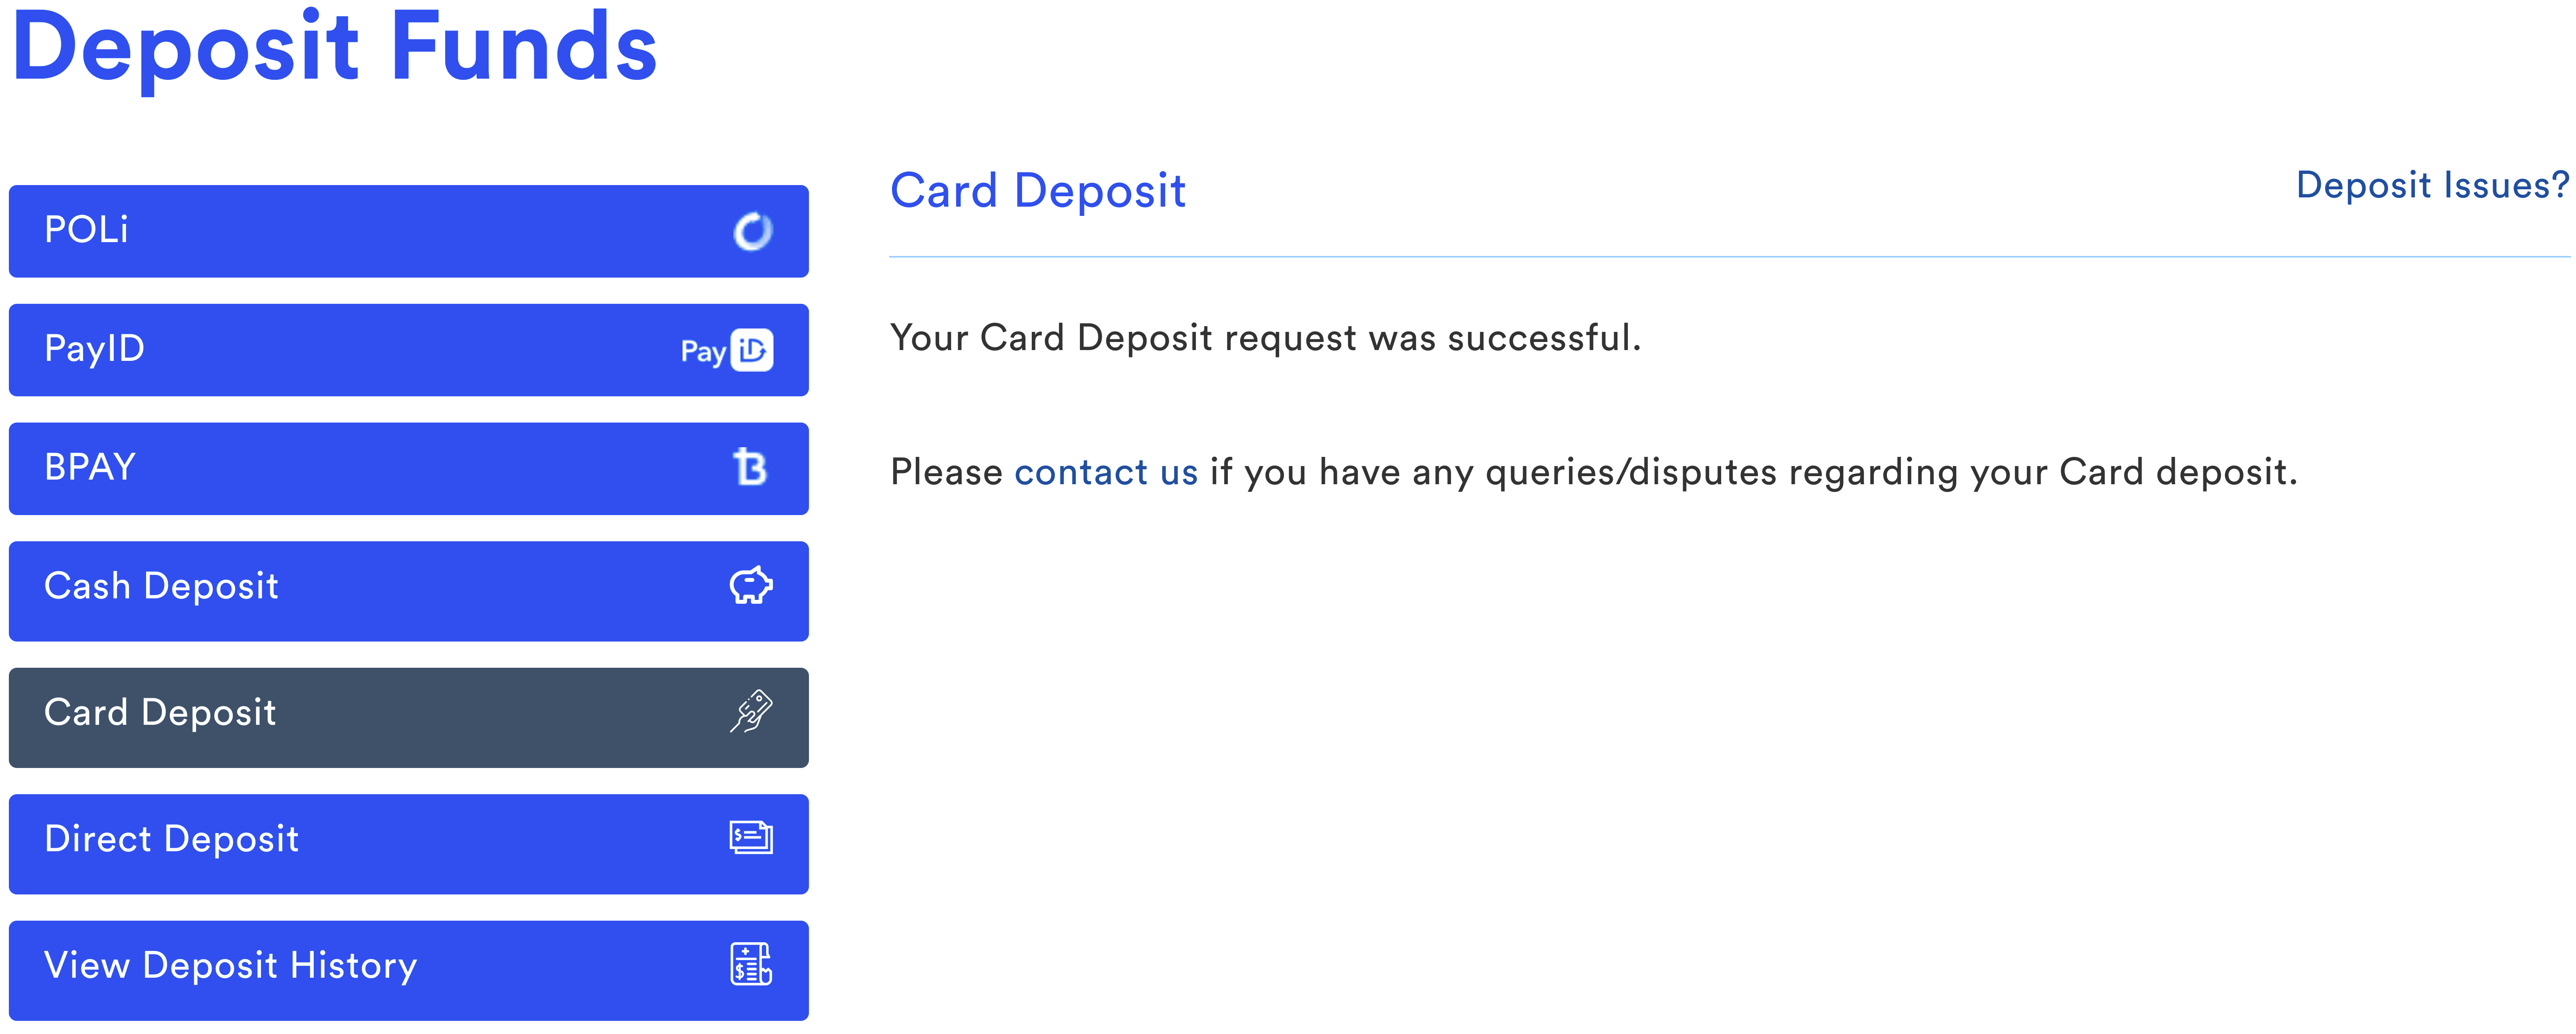 Card_Deposit_Successful.png